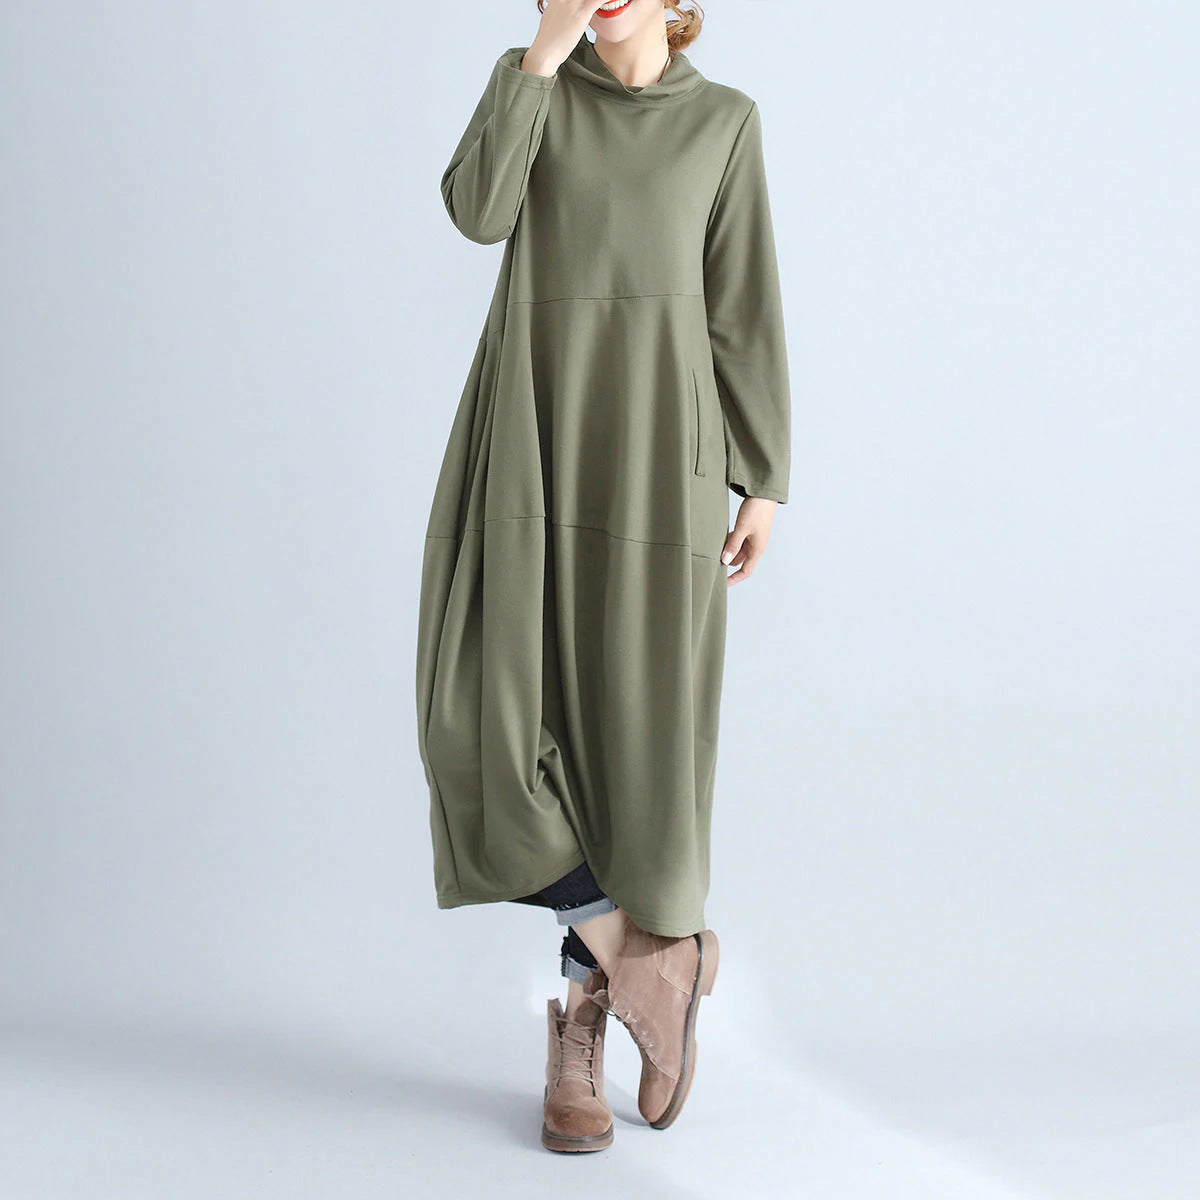 Aovica-Fashion Plus Size Long Sleeve Hoodie Fall Dresses